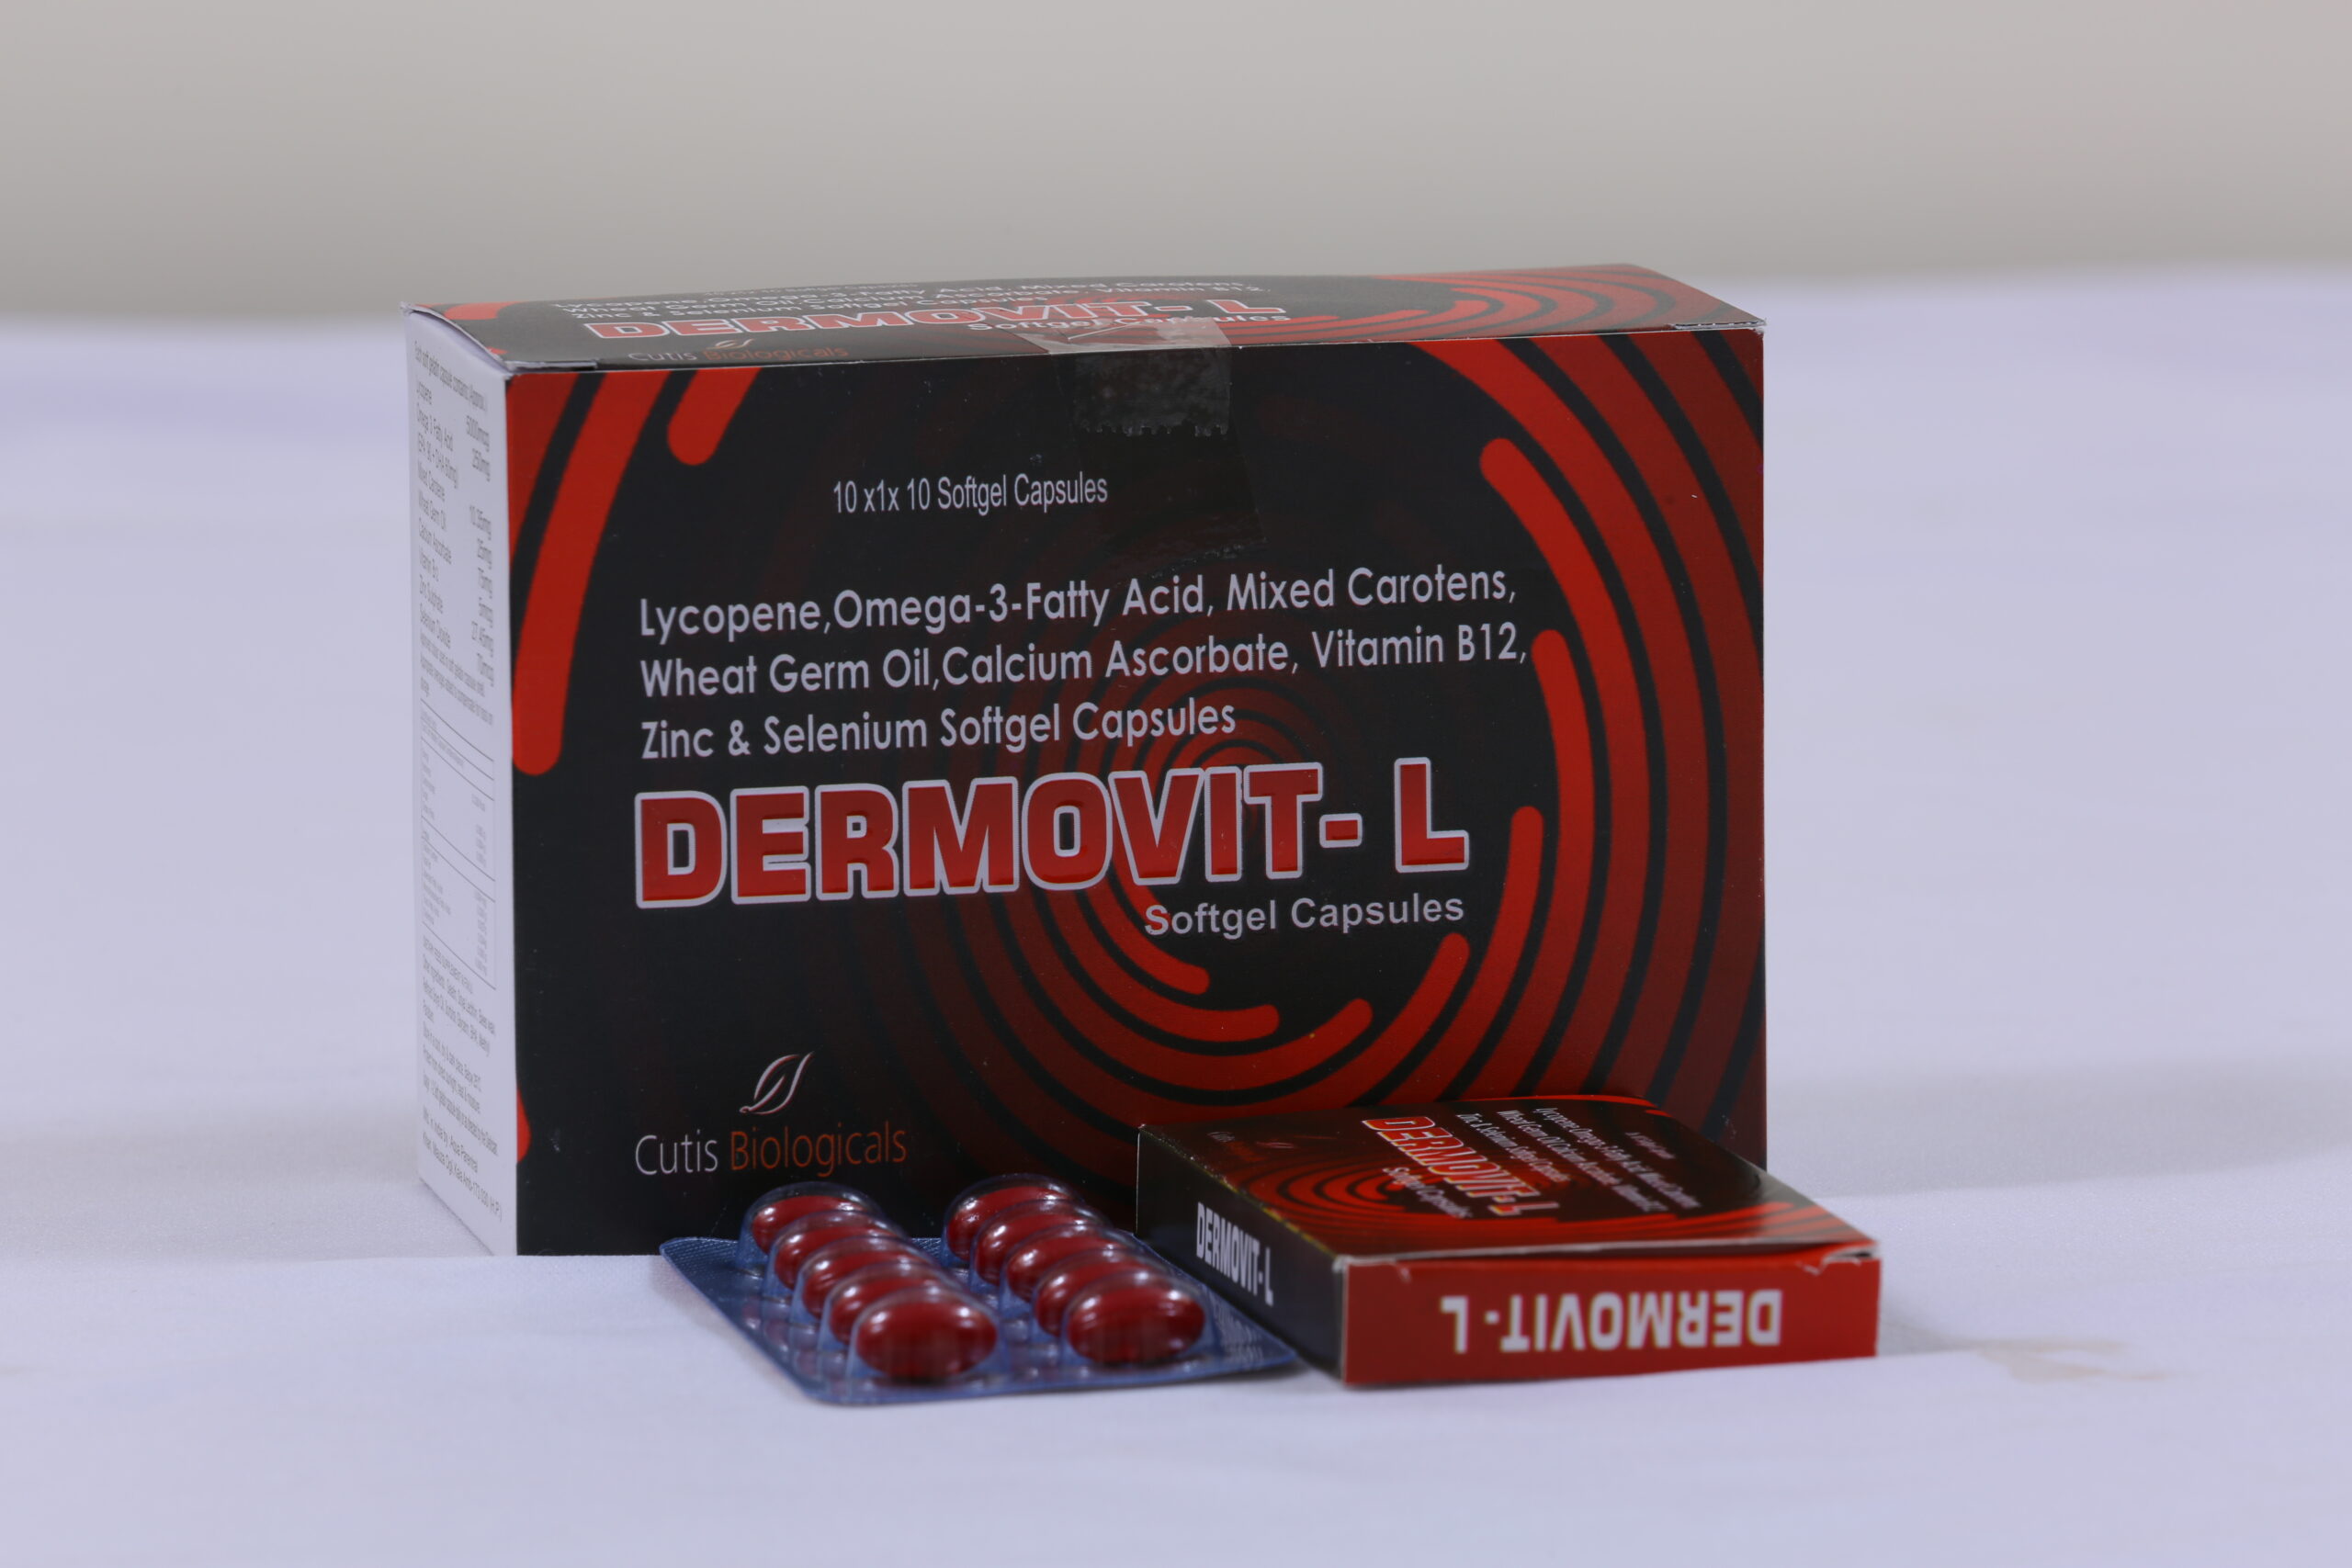 DERMOVIT-L (Lycopene, Omega-3-Fatty Acid, Mixed Carotens, Wheat Germ Oil)